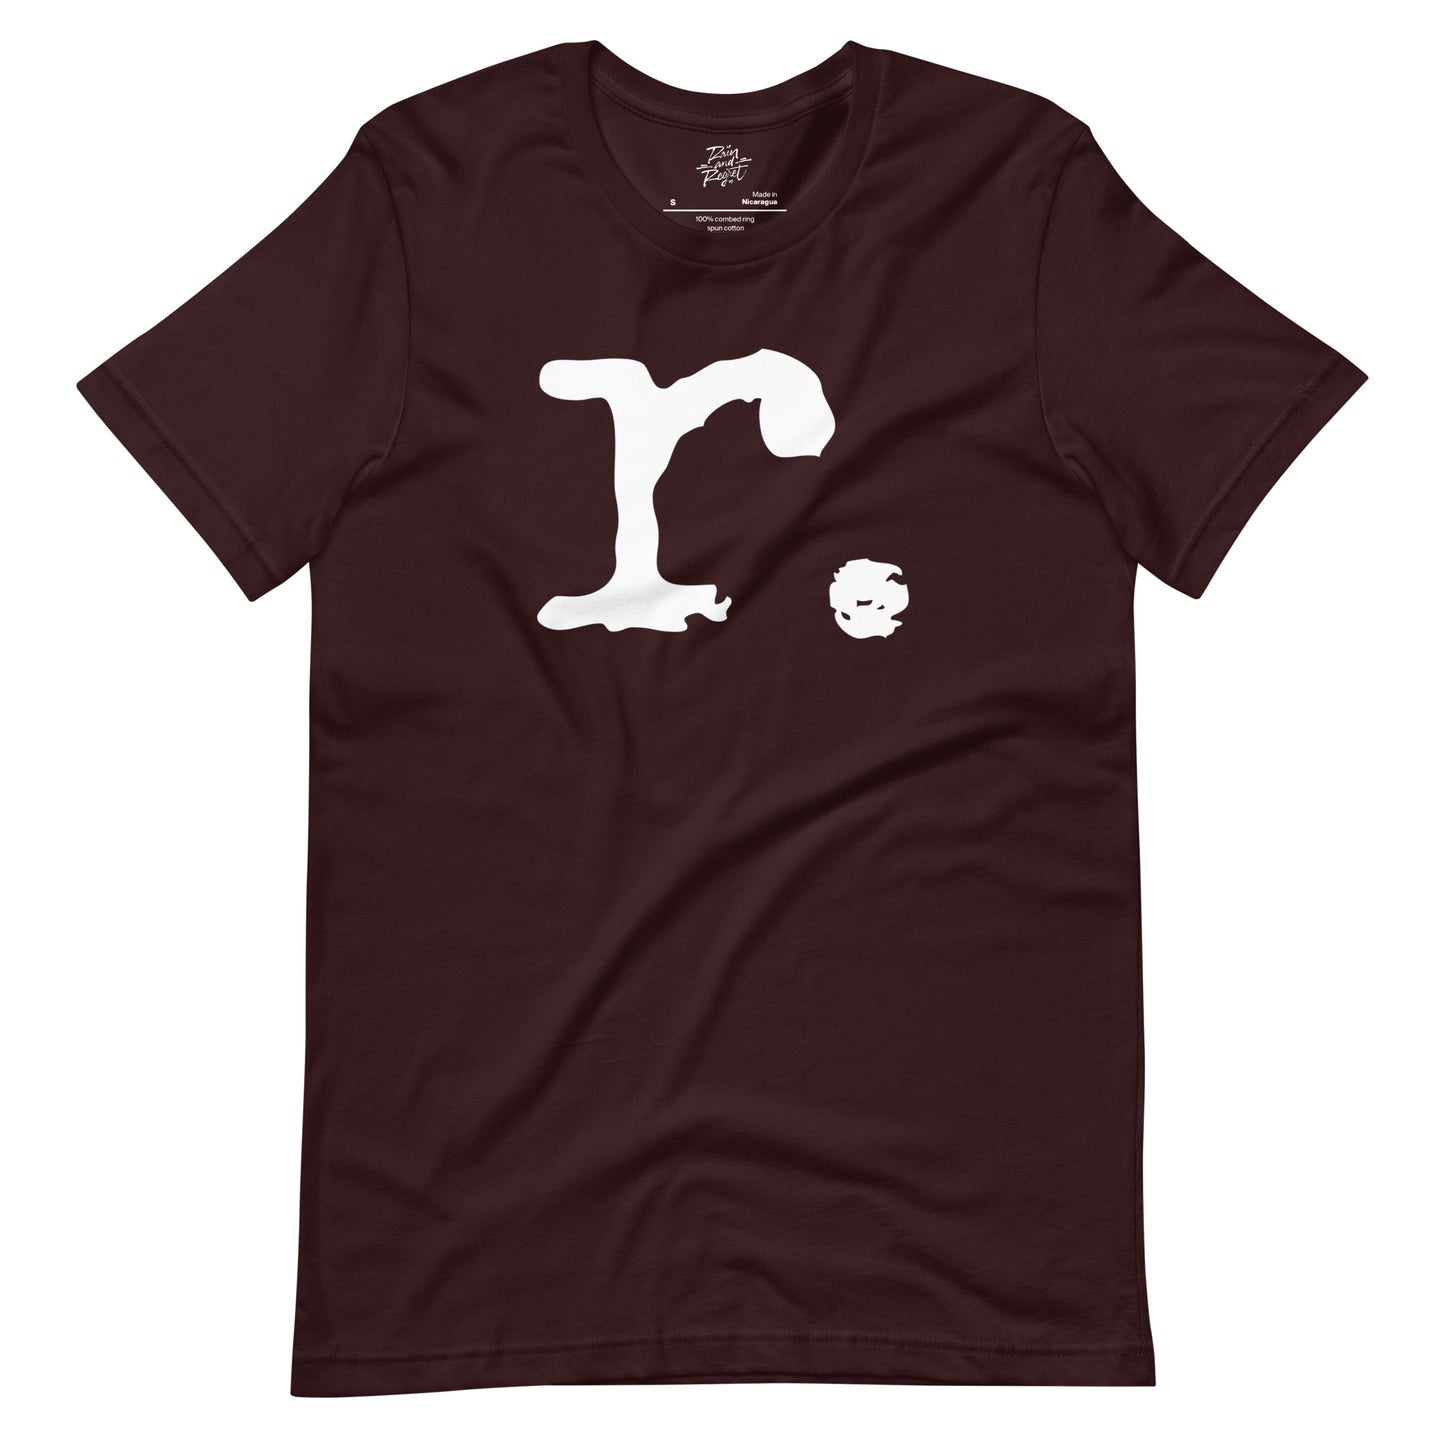 r. rain and regret Unisex t-shirt